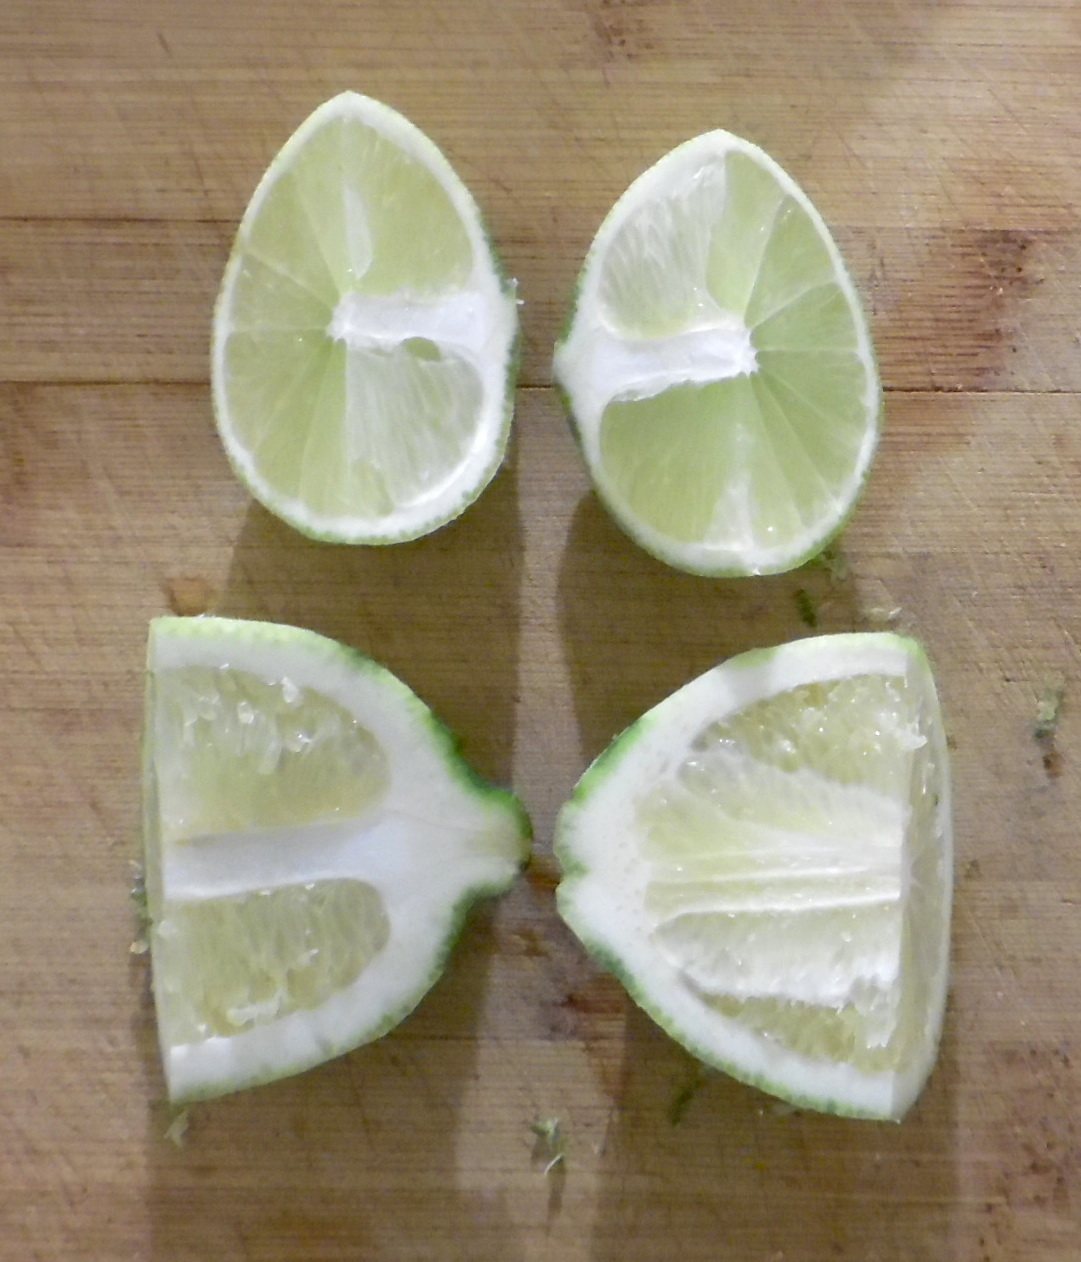 Limes quartered for juicing.